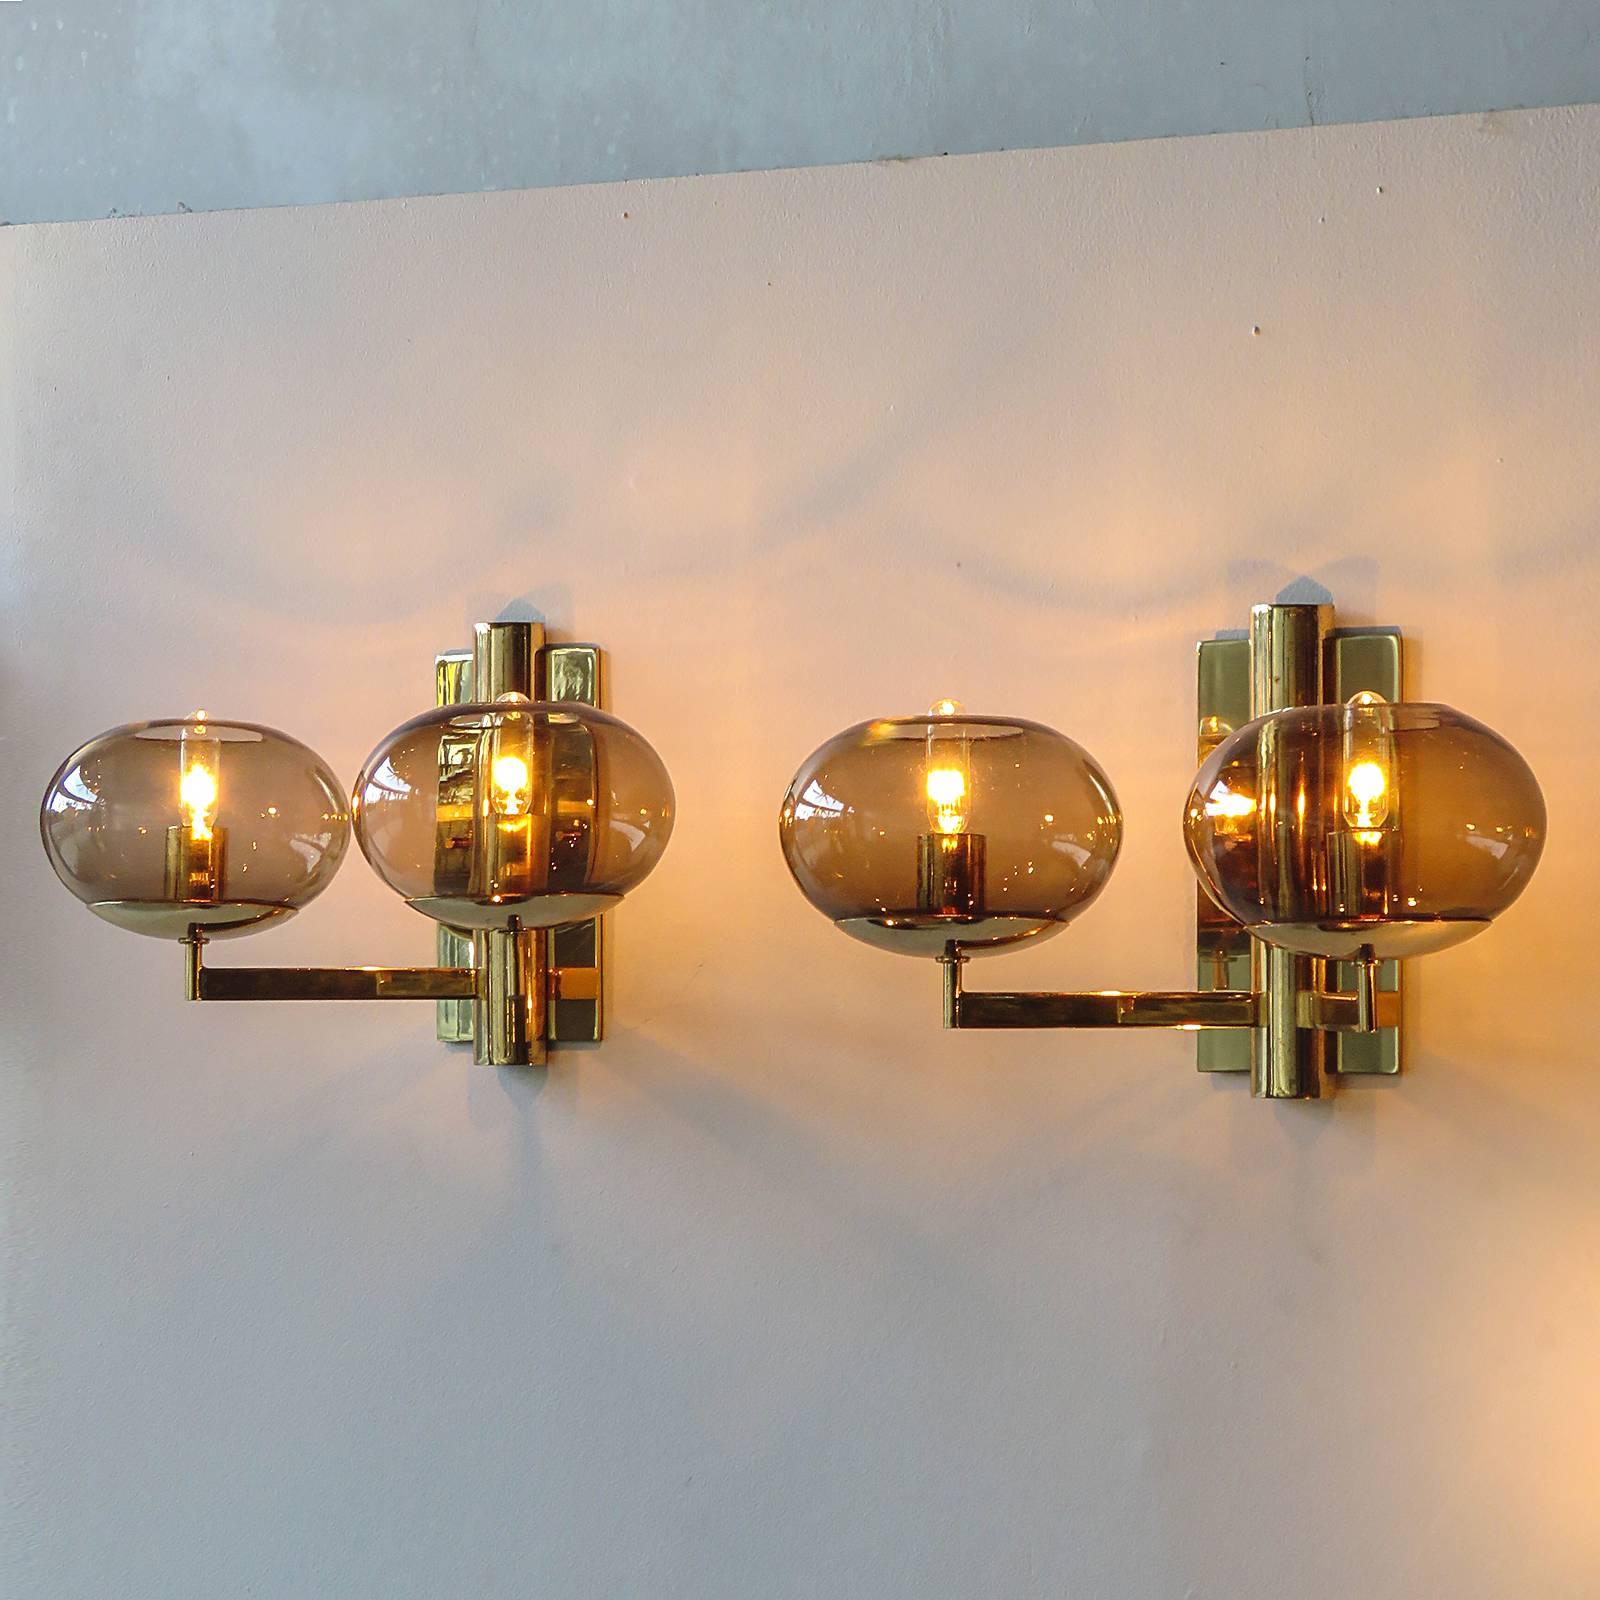 Pair of Double Arm Wall Lights by Gaetano Sciolari 1